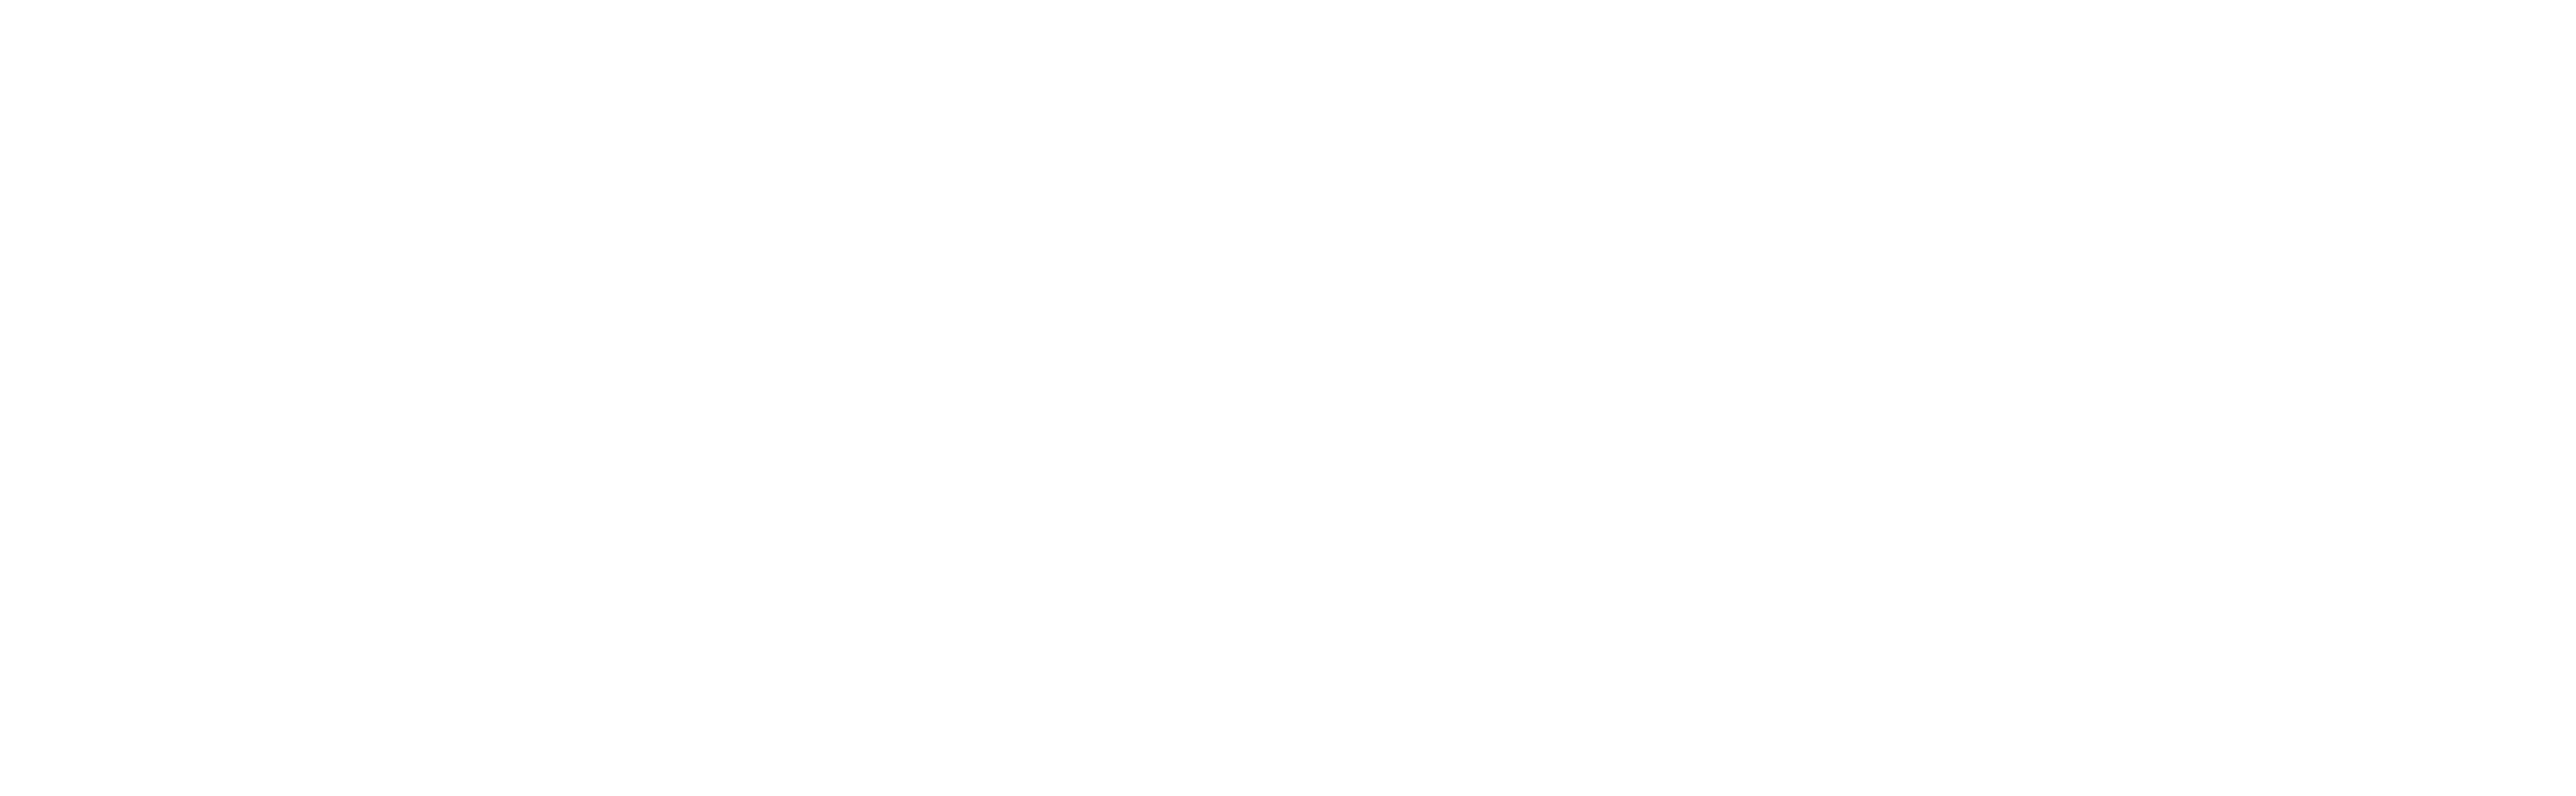 hallandale dental care logo